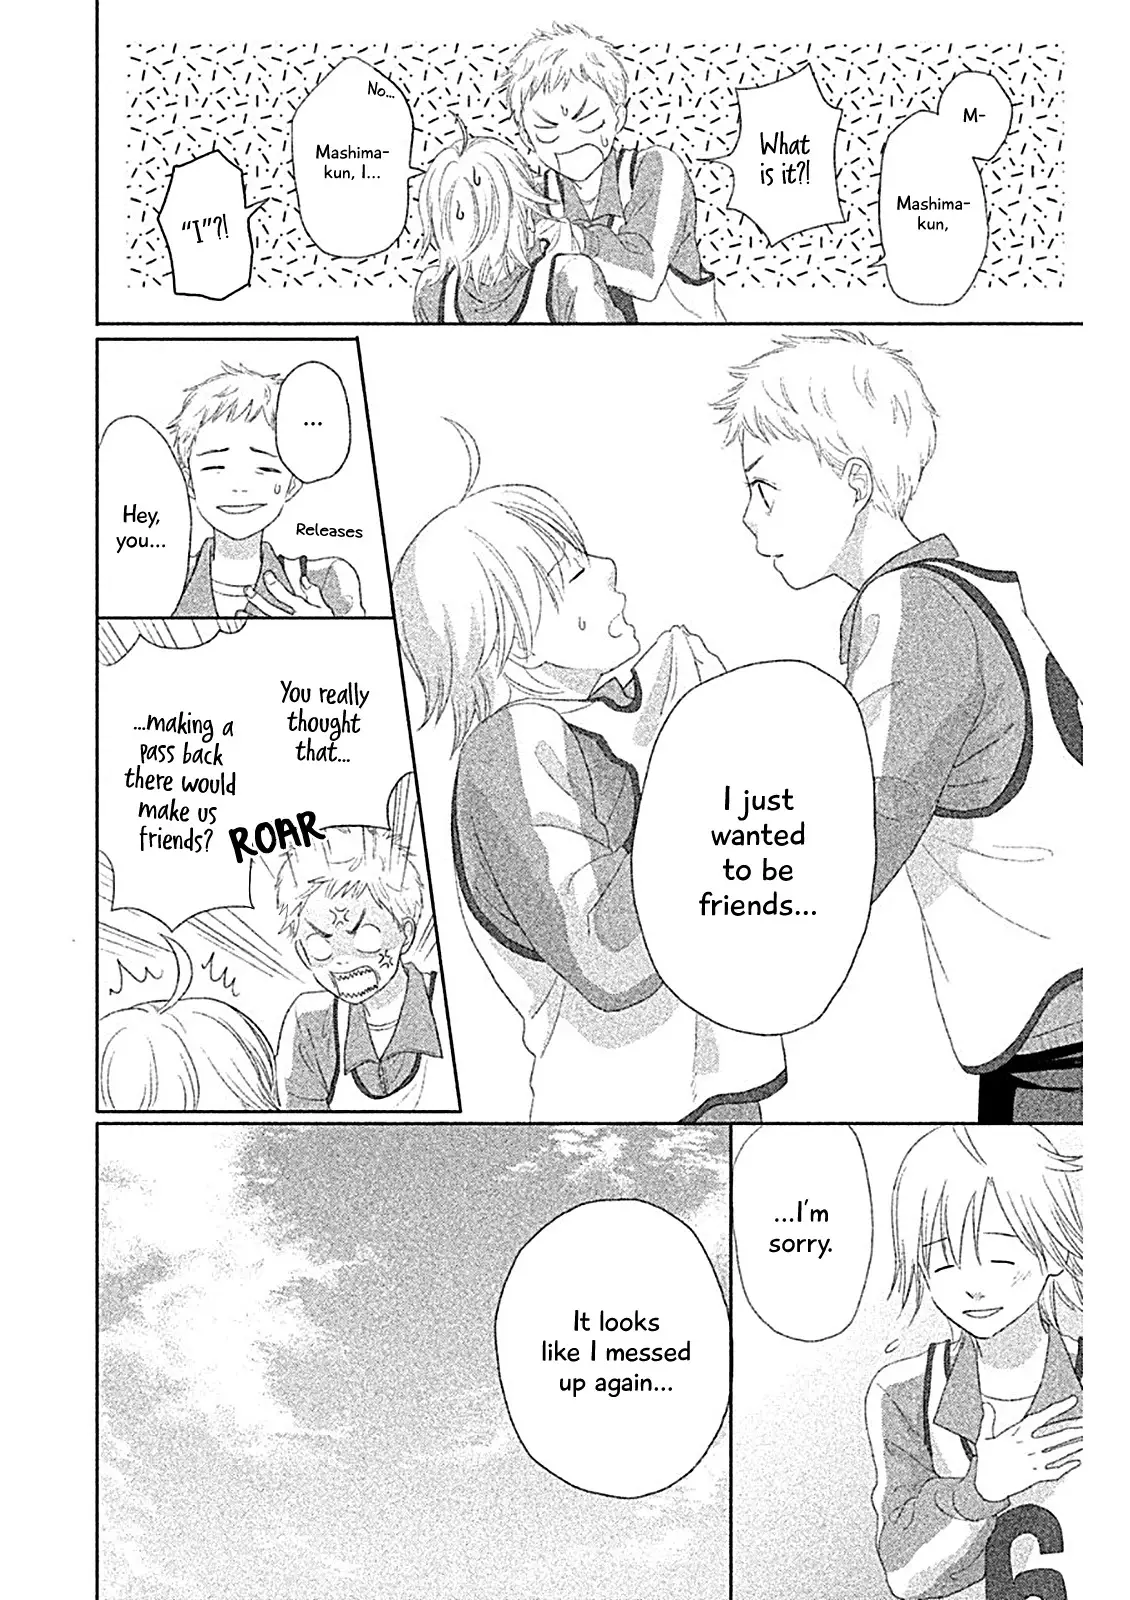 Chihayafuru: Middle School Arc - 4 page 15